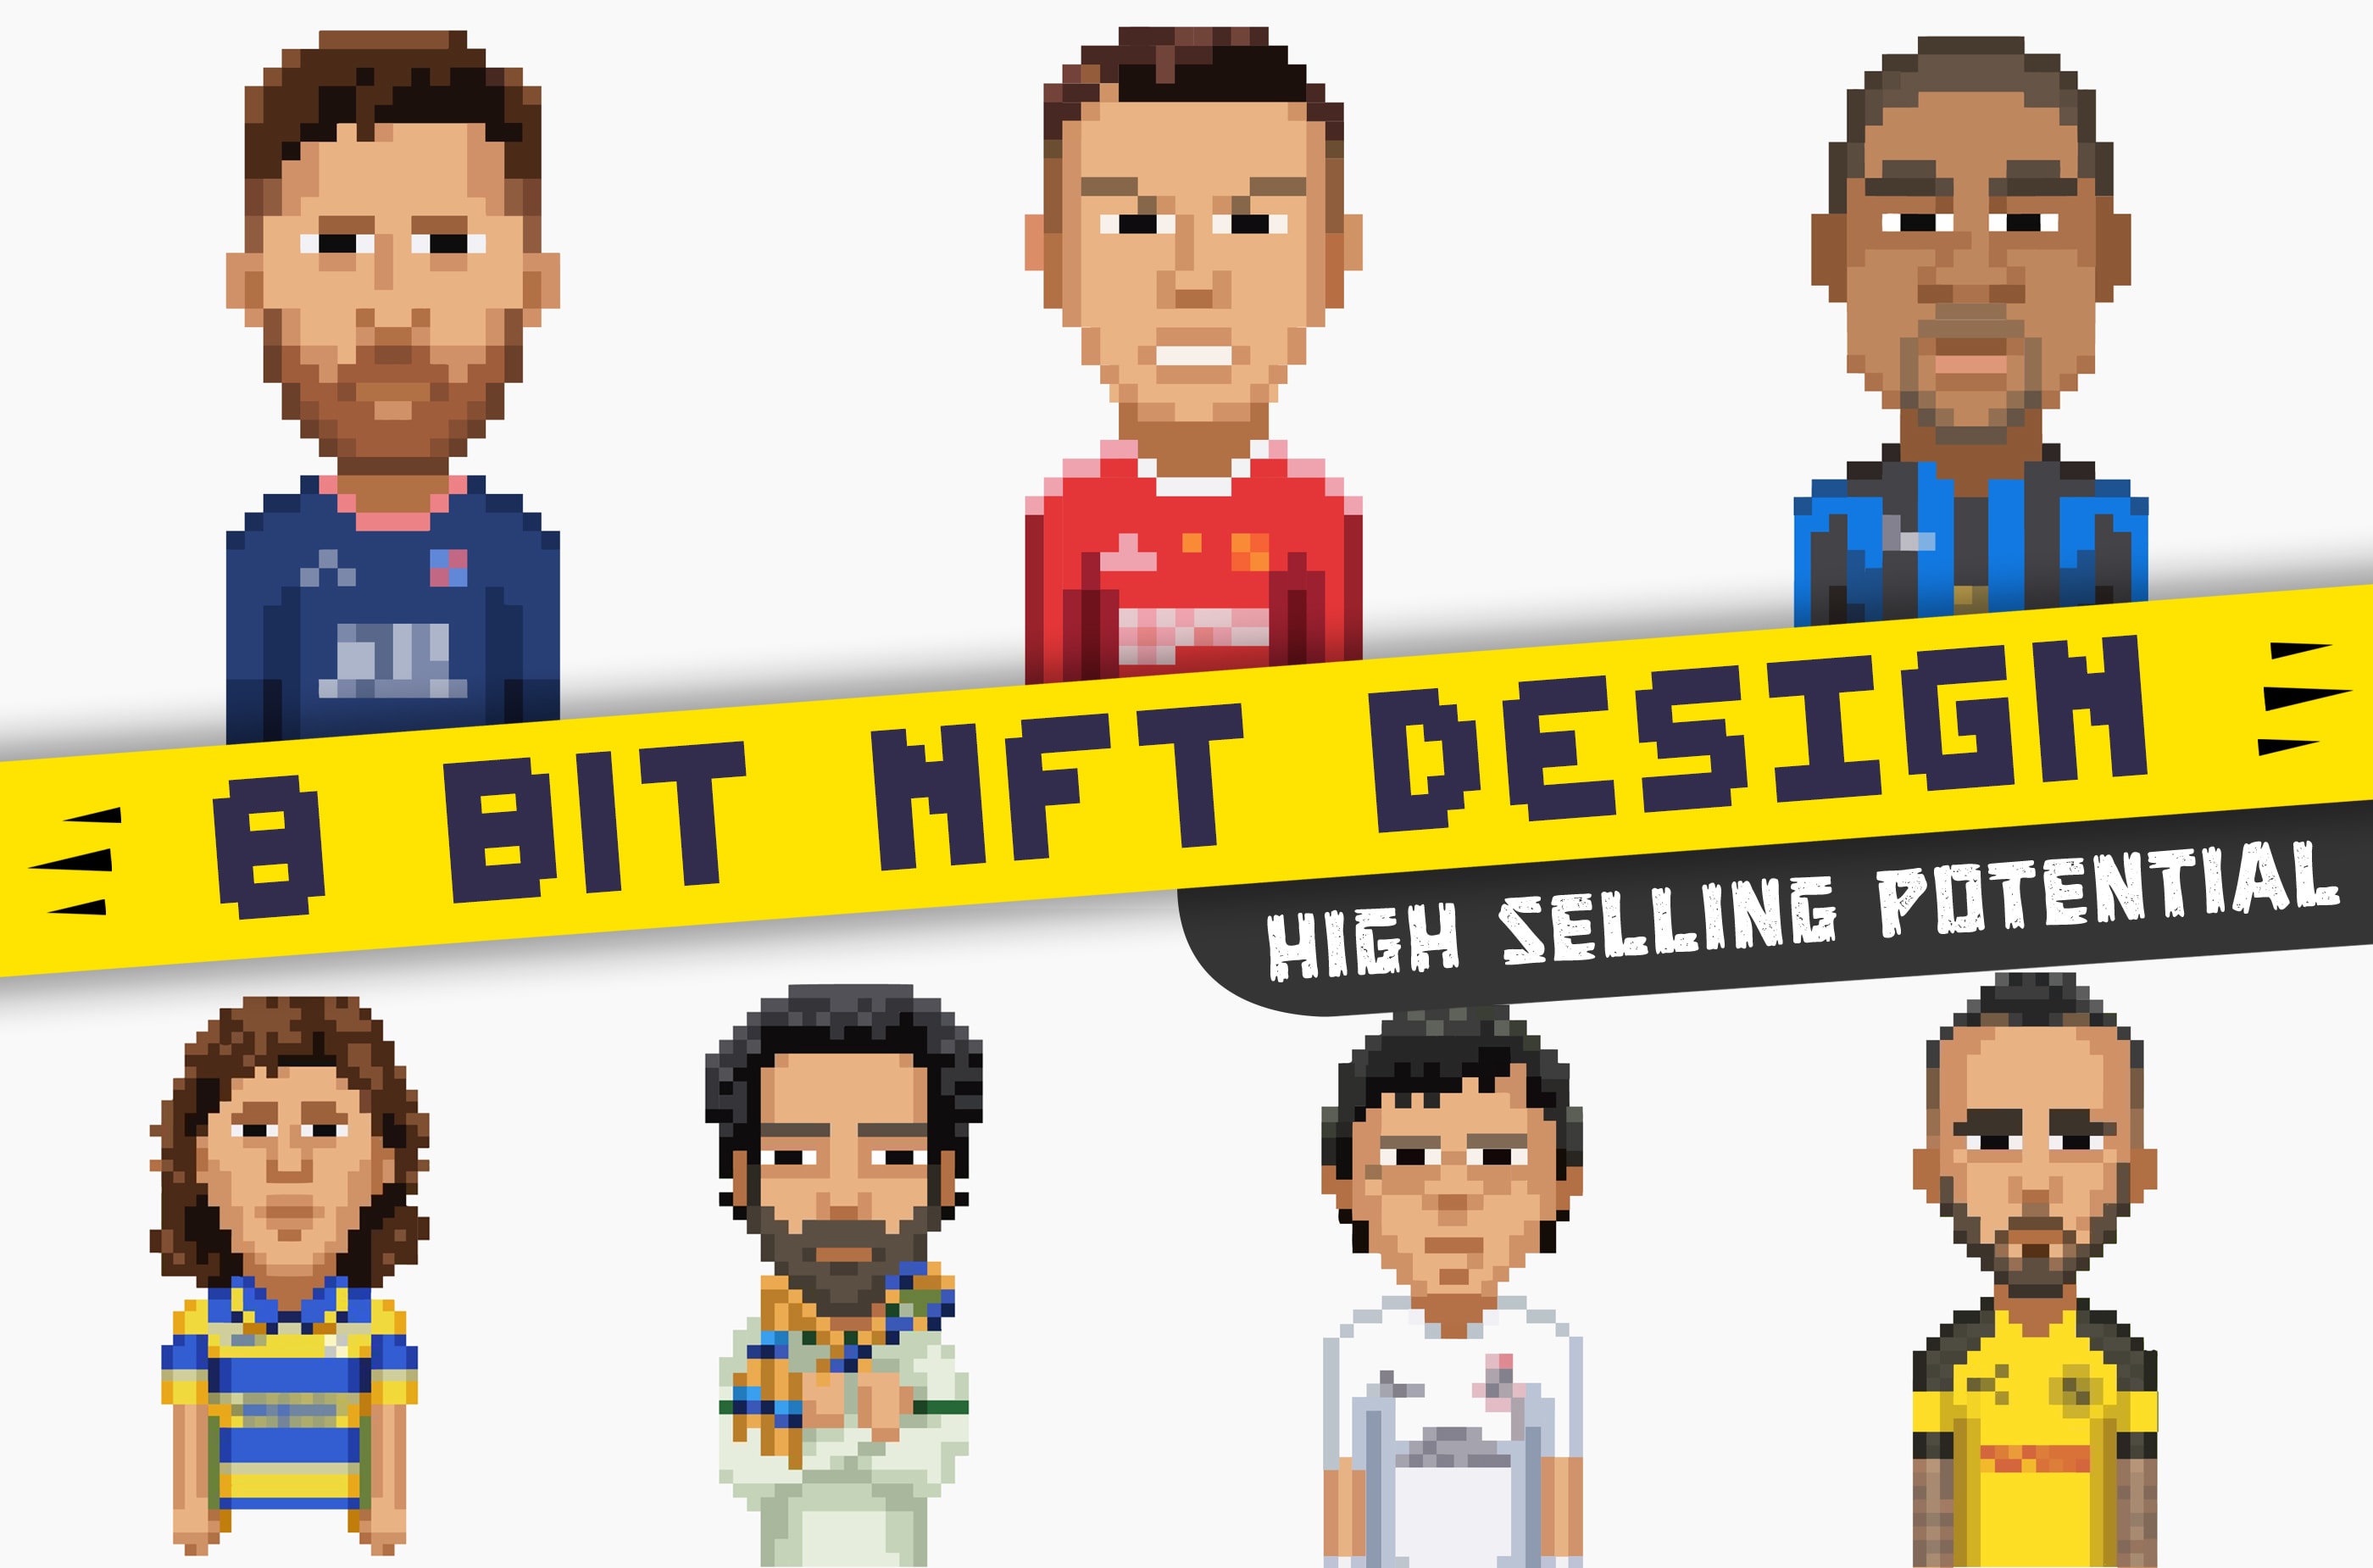 Mint Your Own Customized NFT via The 8biticon NFT Pixel Avatar Creator